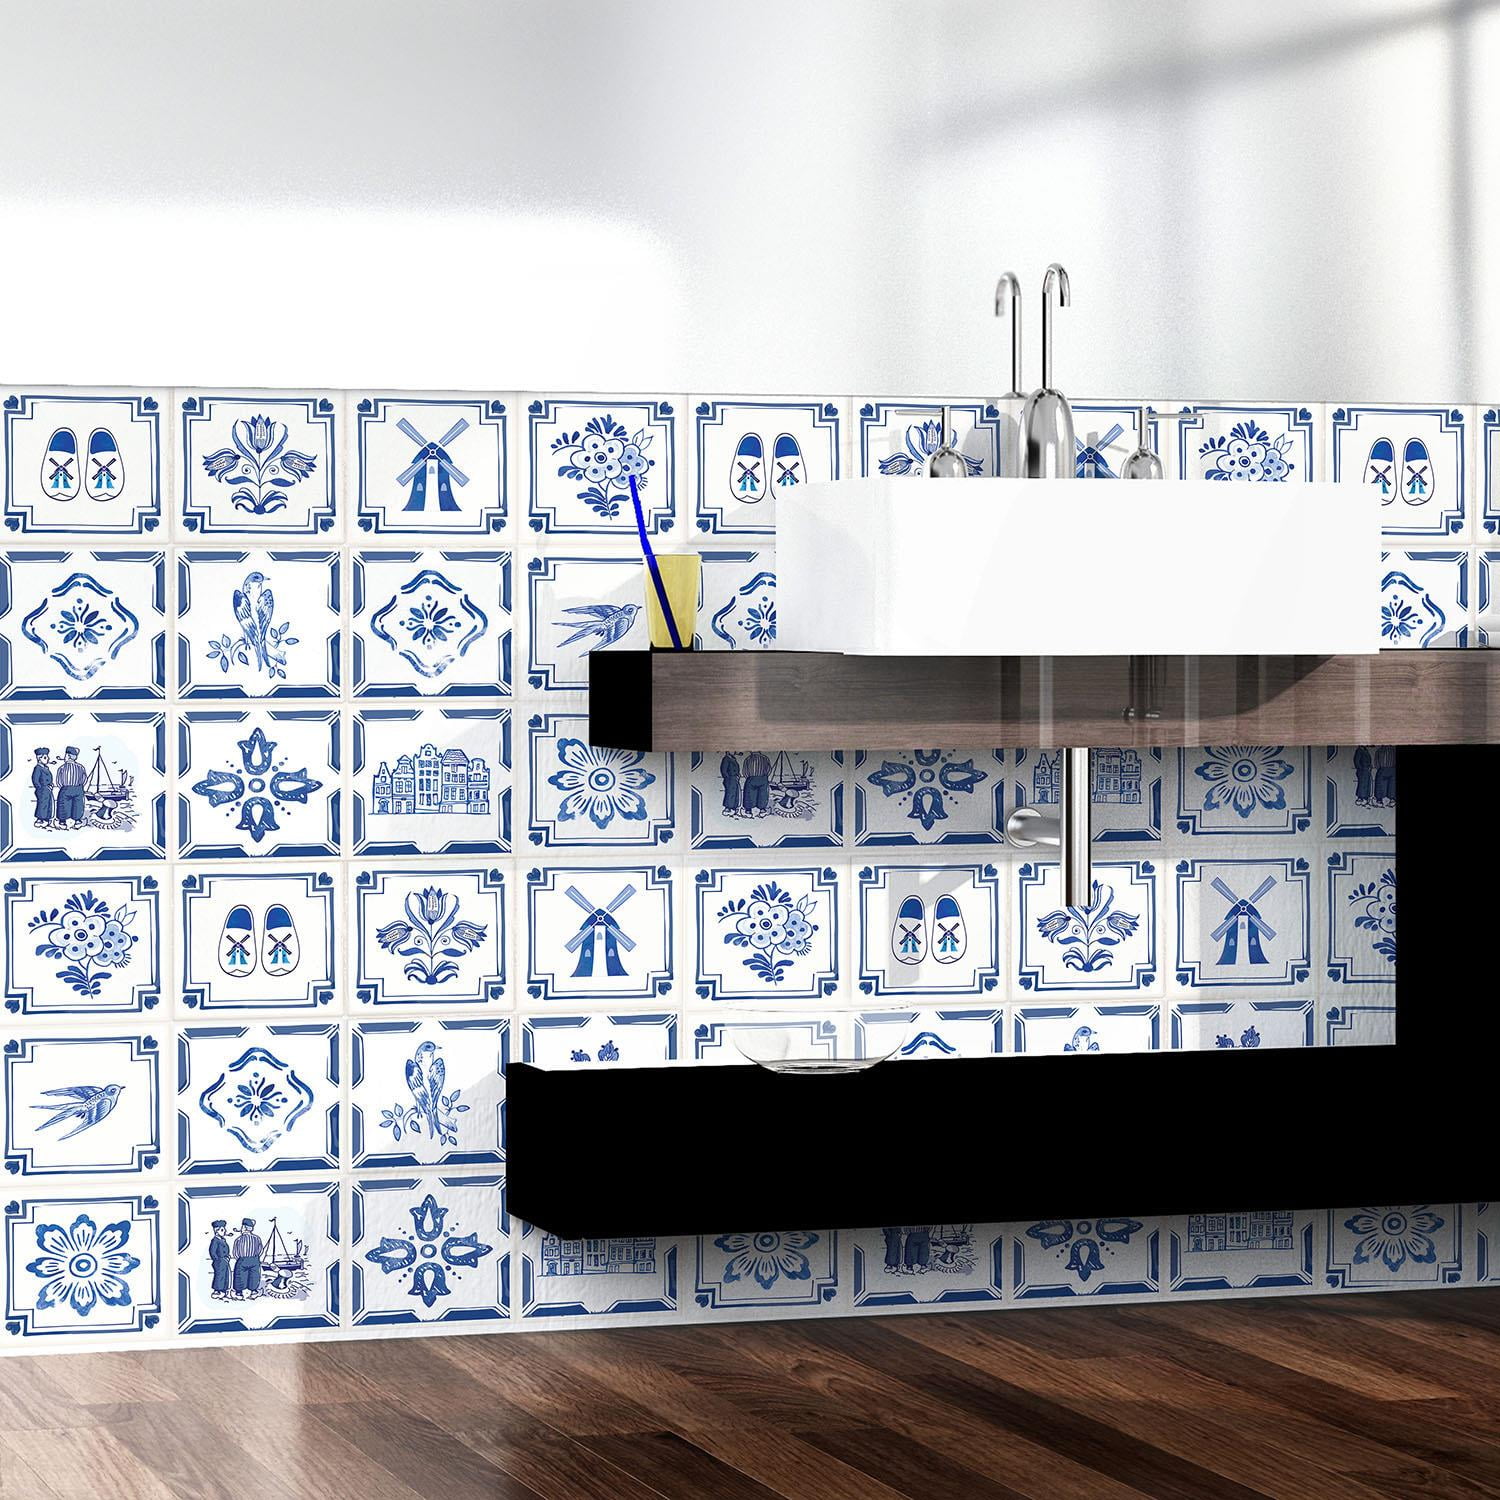 6'' @ 24pcs Walplus Dutch Blue Tile Wall Sticker Decal Decoration Size 